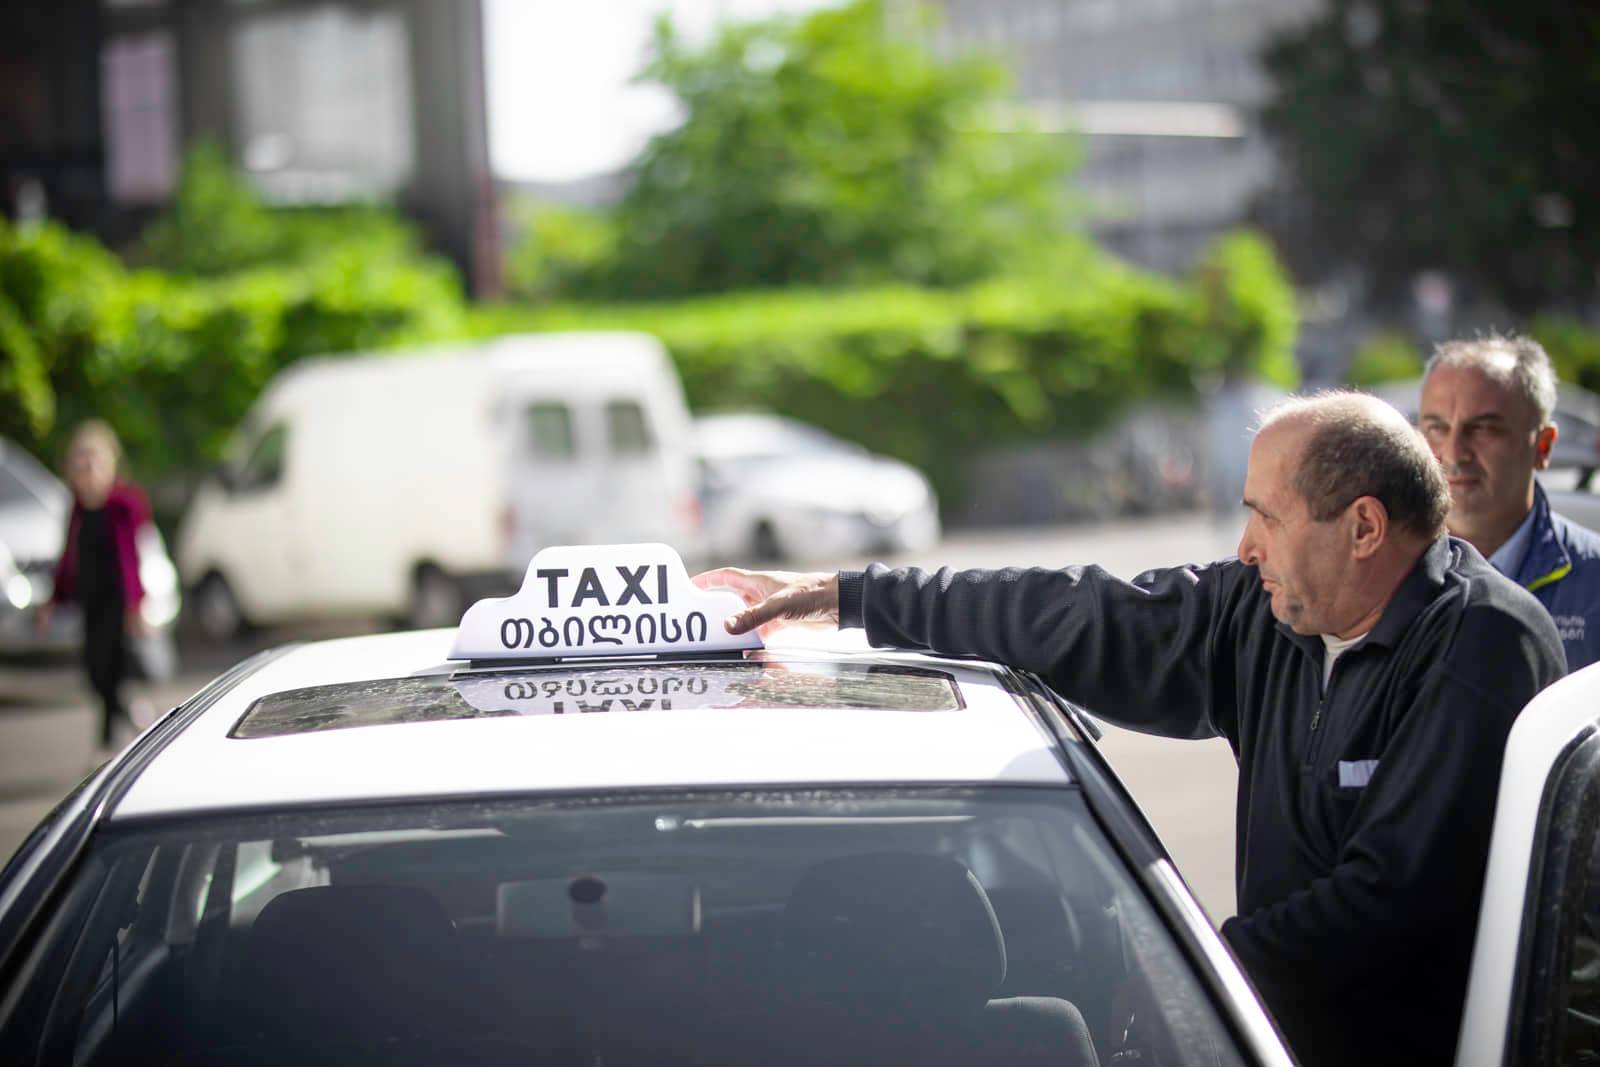 такси такси